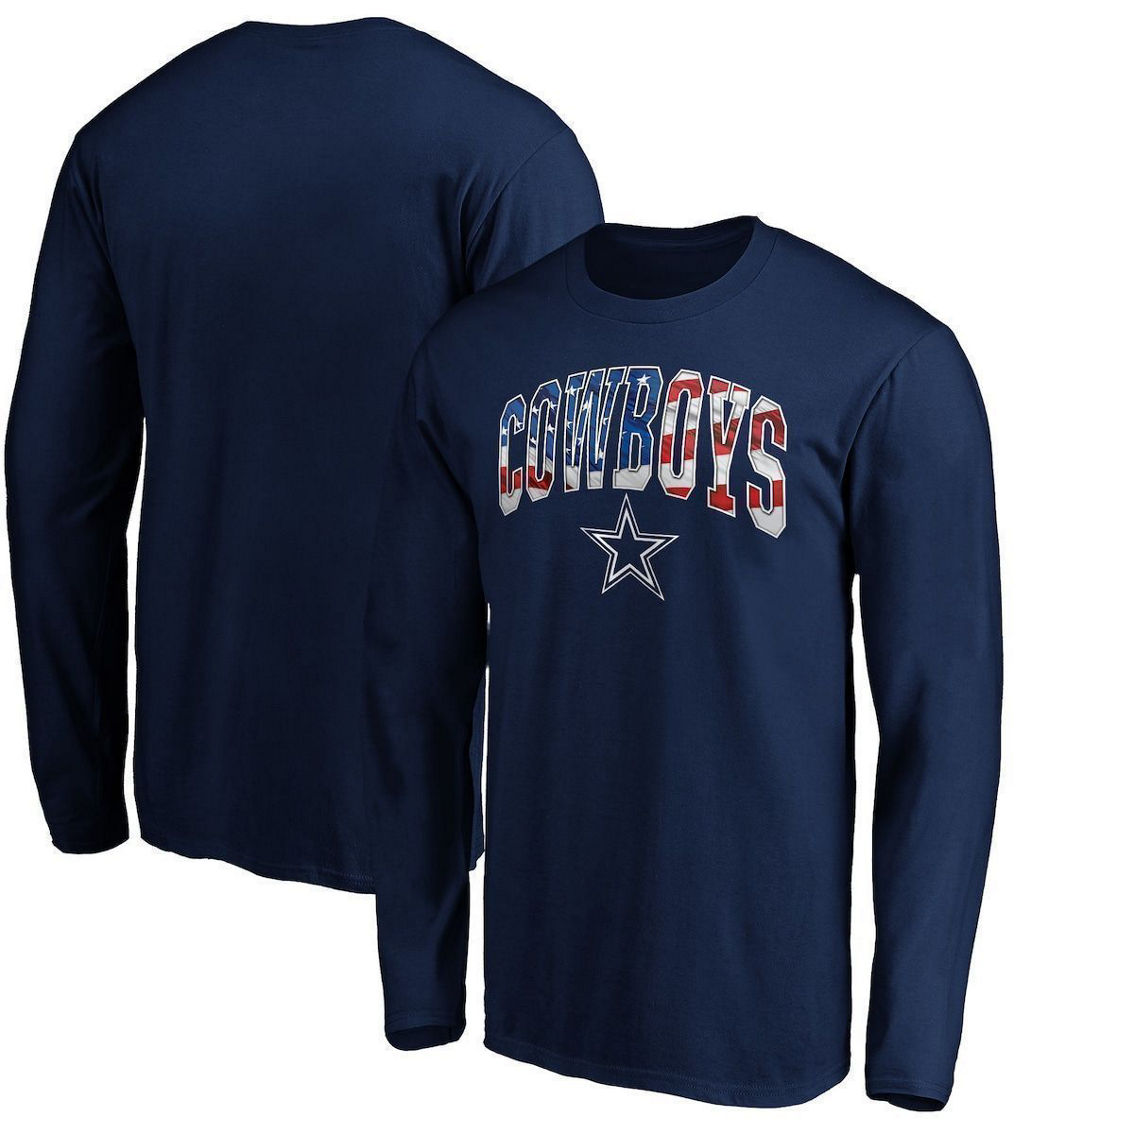 Fanatics Branded Men's Navy Dallas Cowboys Banner Wave Long Sleeve T-Shirt - Image 2 of 4